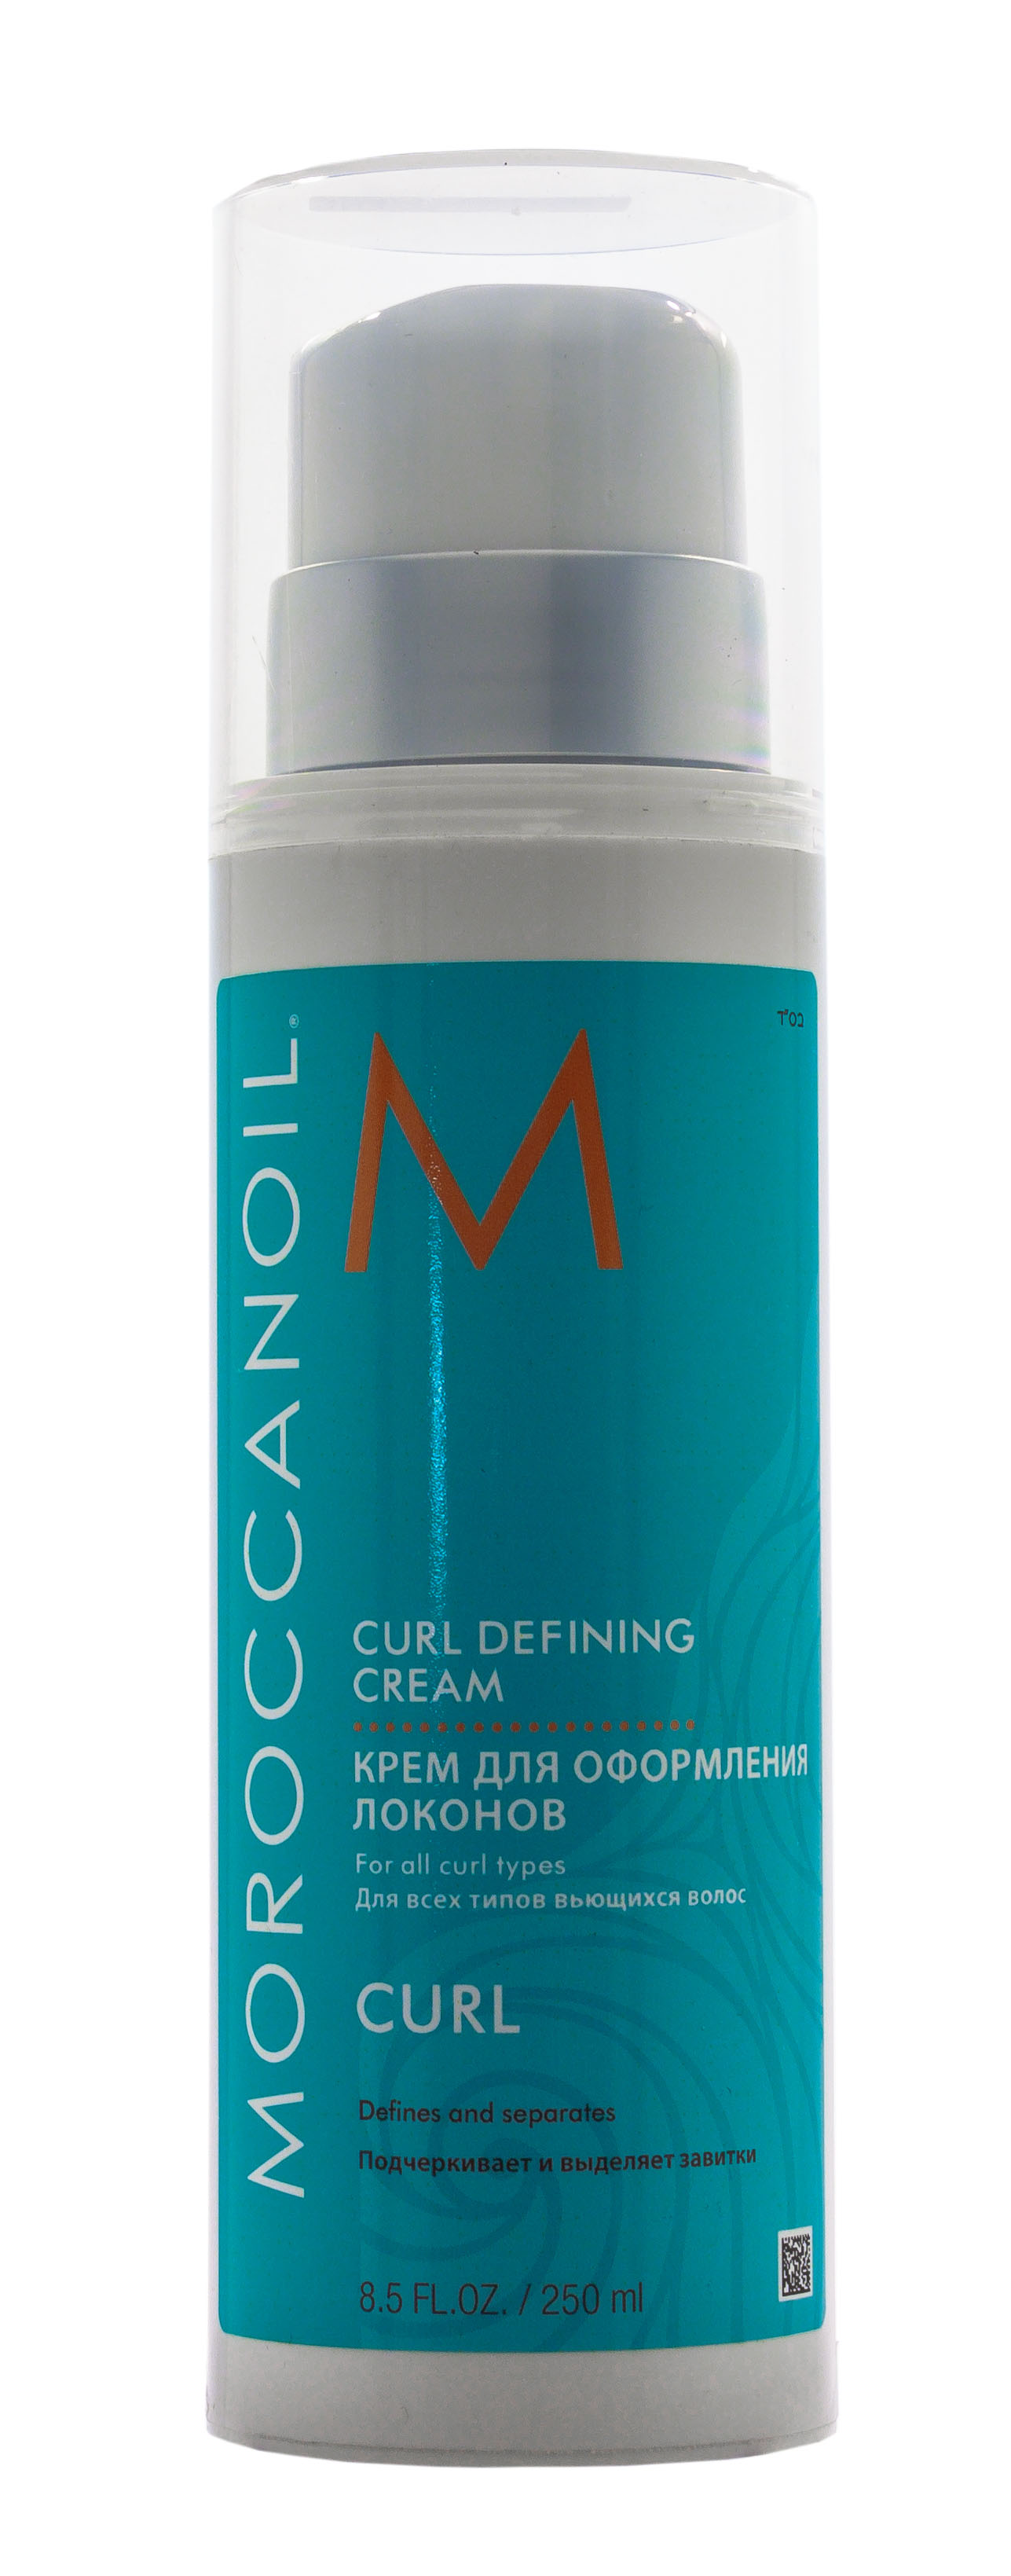 Moroccanoil Крем для оформления локонов, 250 мл (Moroccanoil, Curl) curl defining cream крем для оформления локонов moroccanoil 250 мл